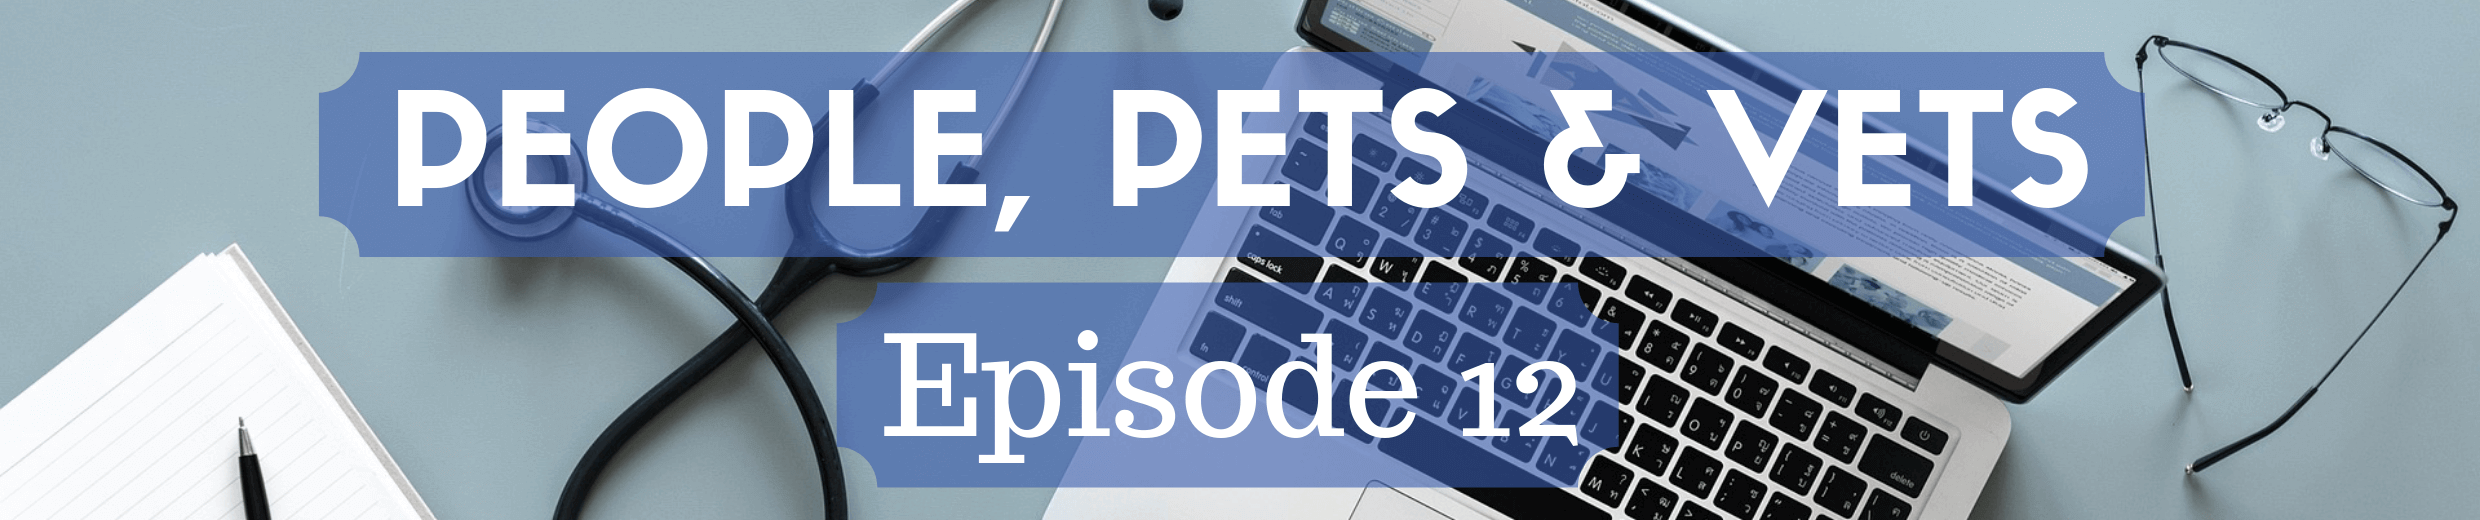 People, Pets & Vets: Episode 12